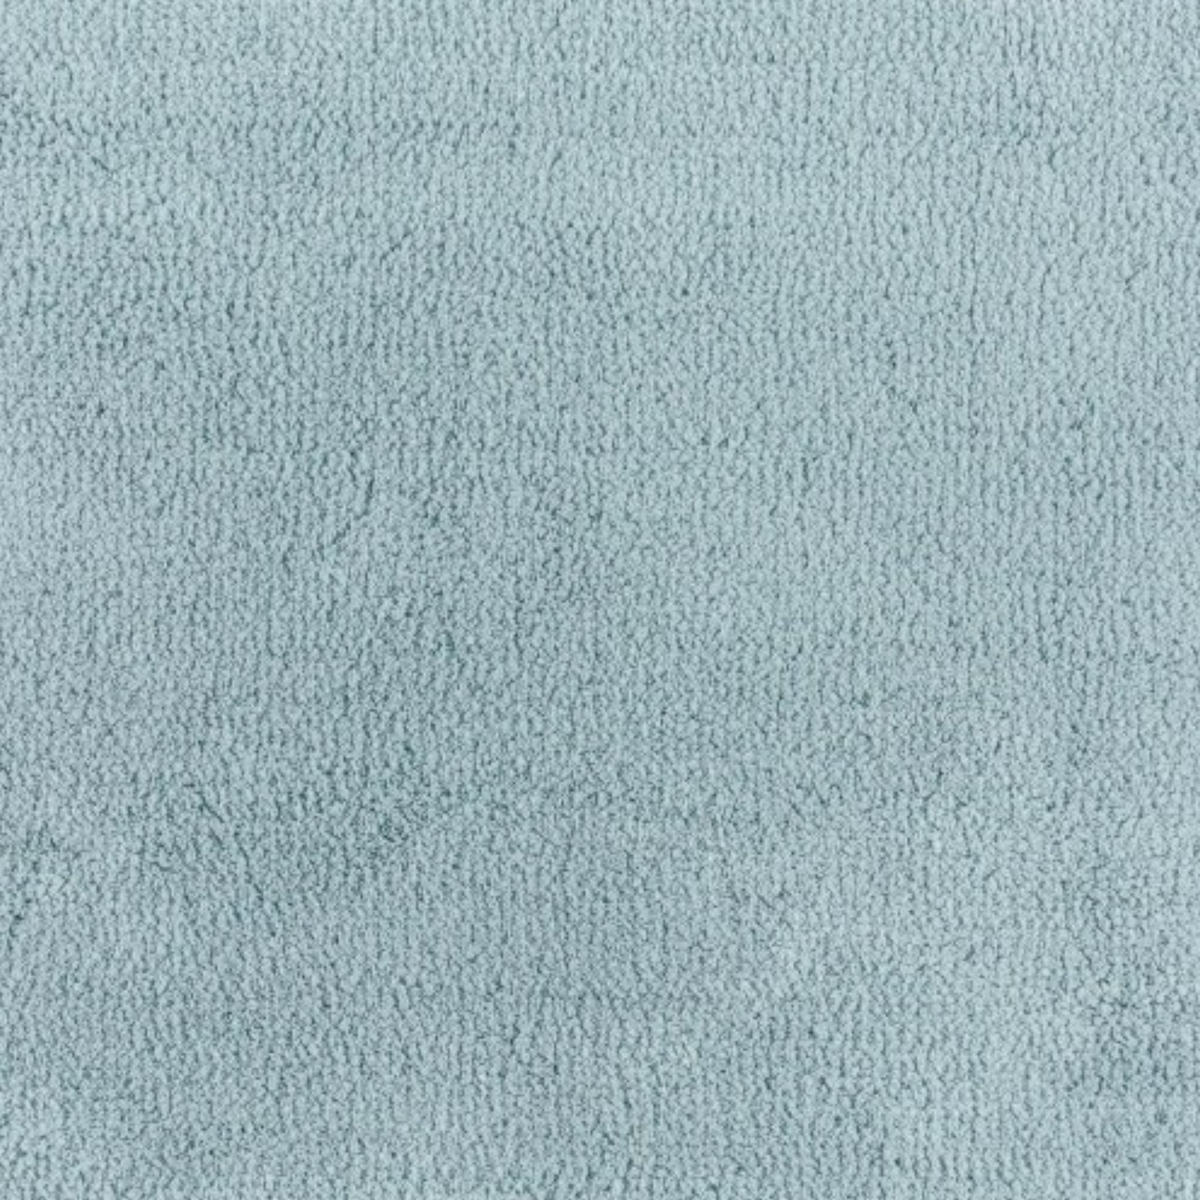 Fabric Closeup of Graccioza Cool Bath Rugs Sea Mist Color